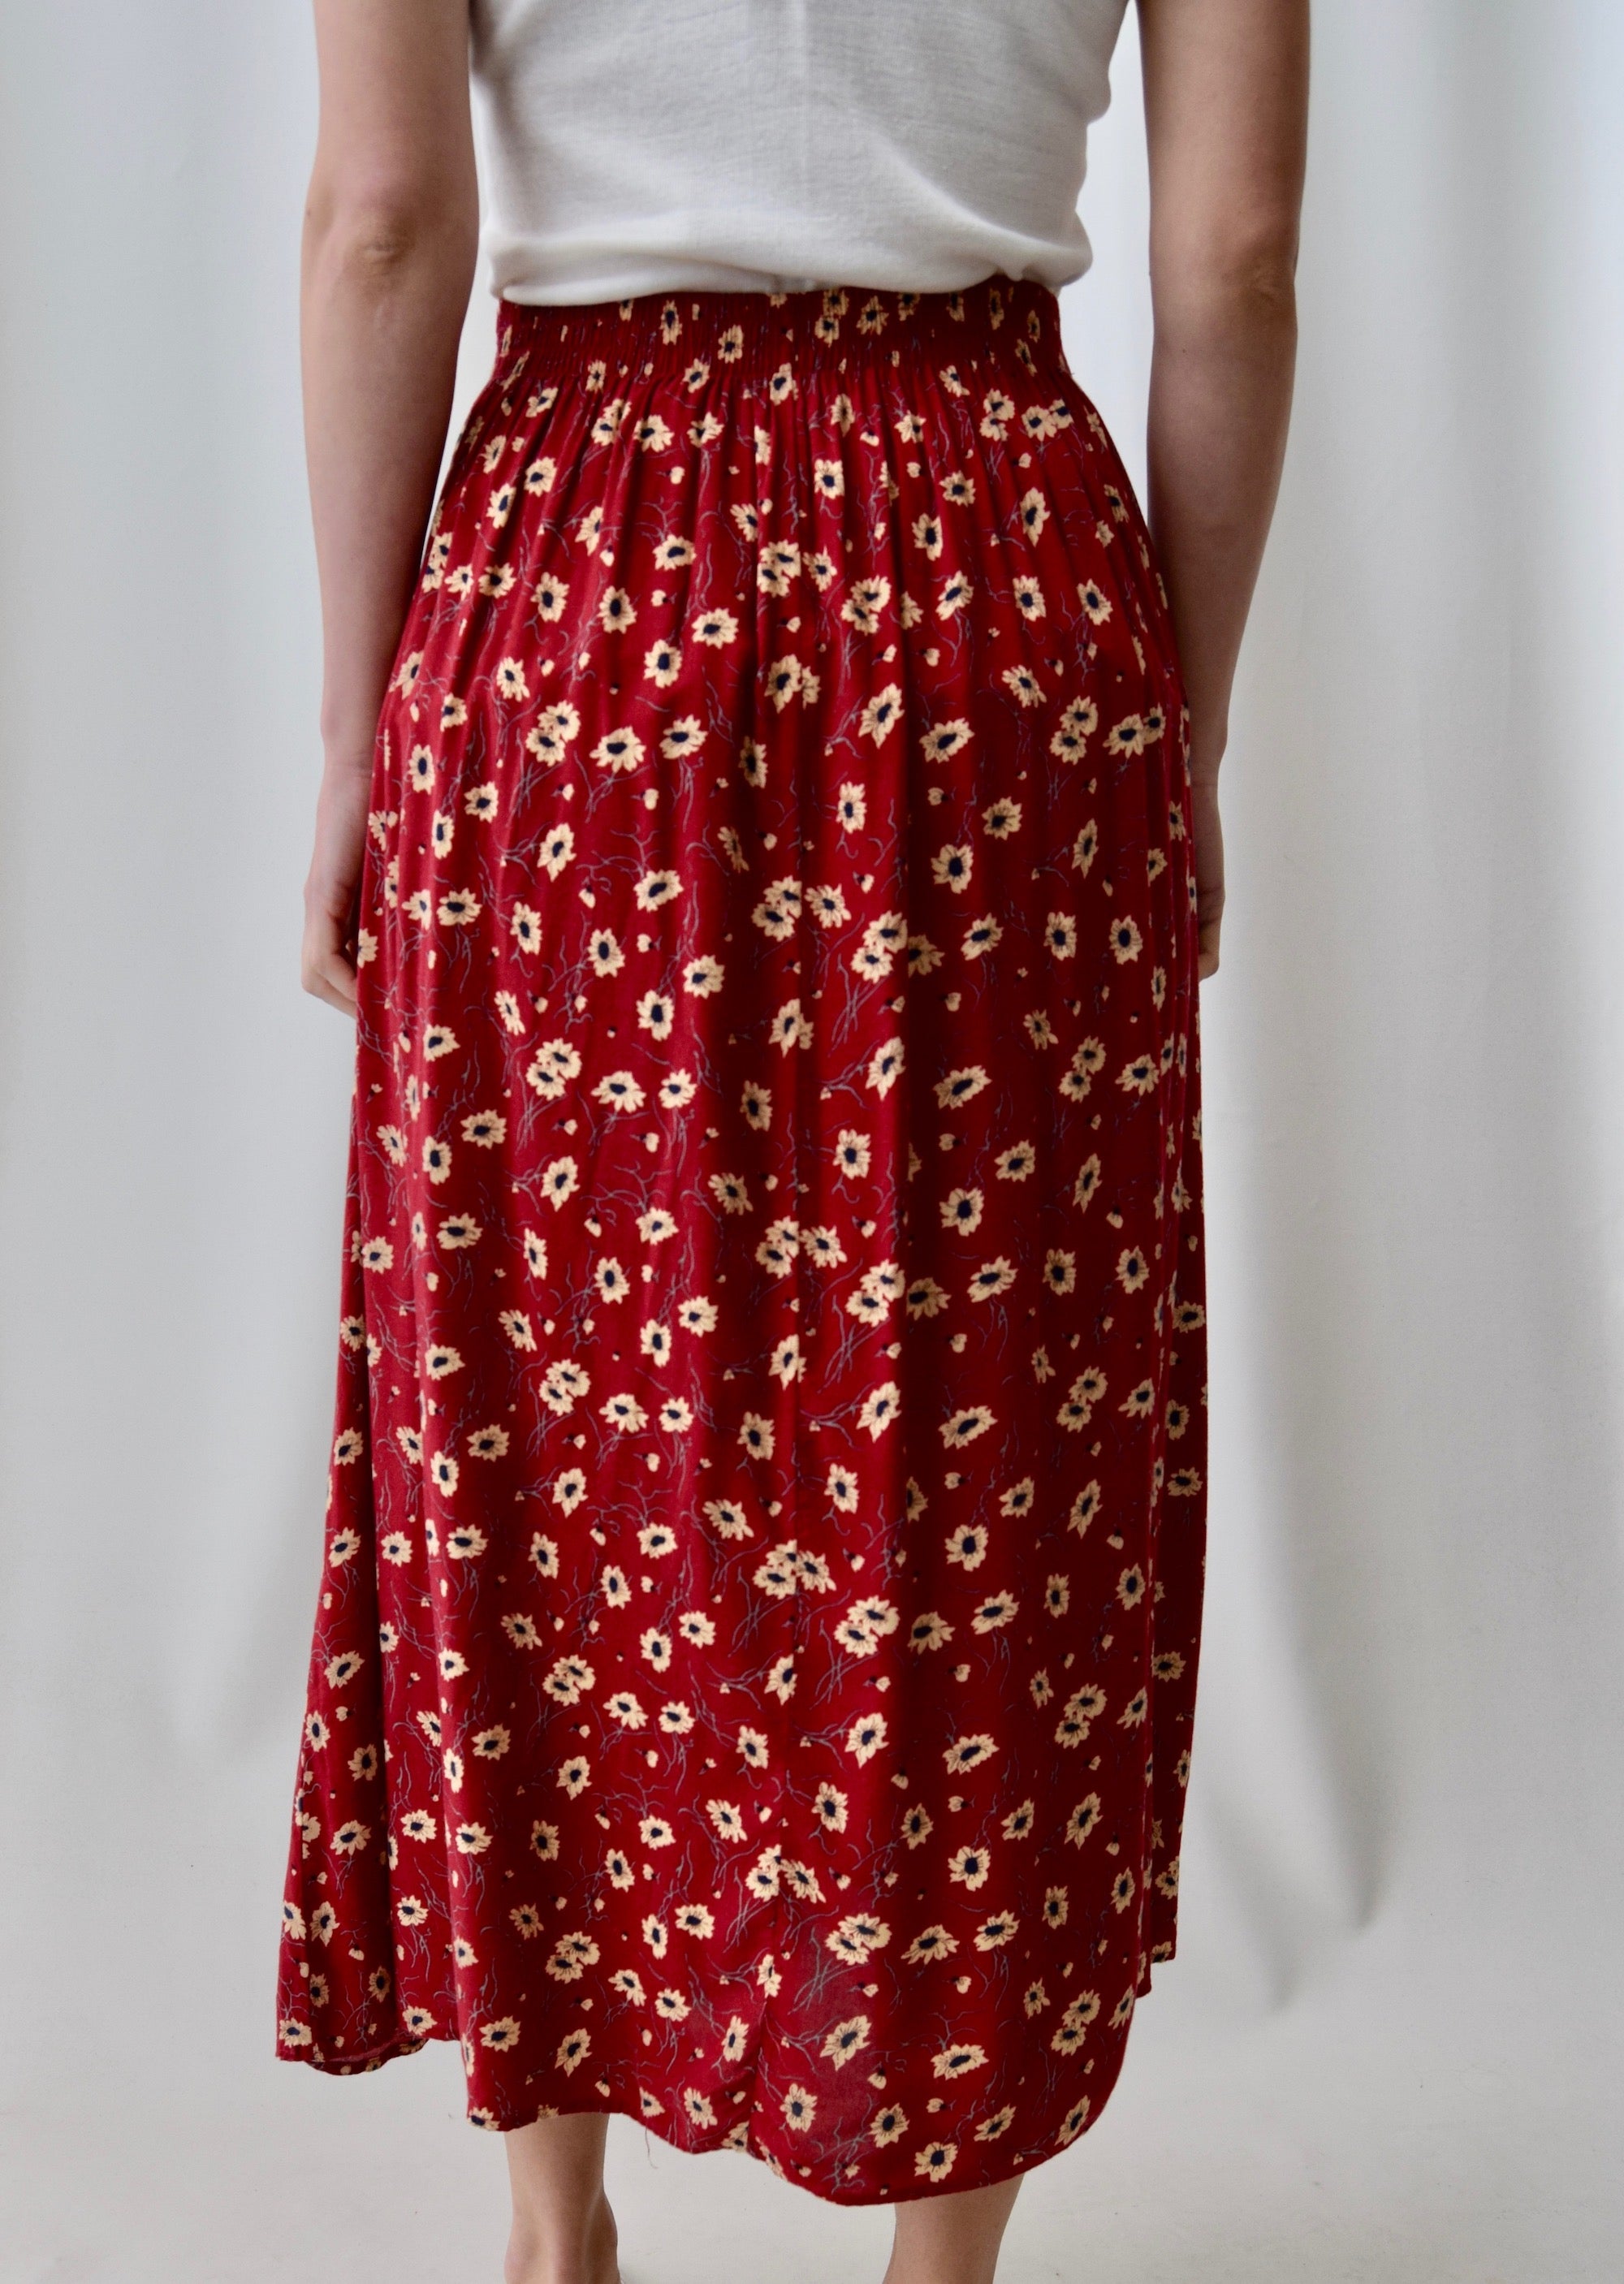 Cranberry Floral Button Up Skirt